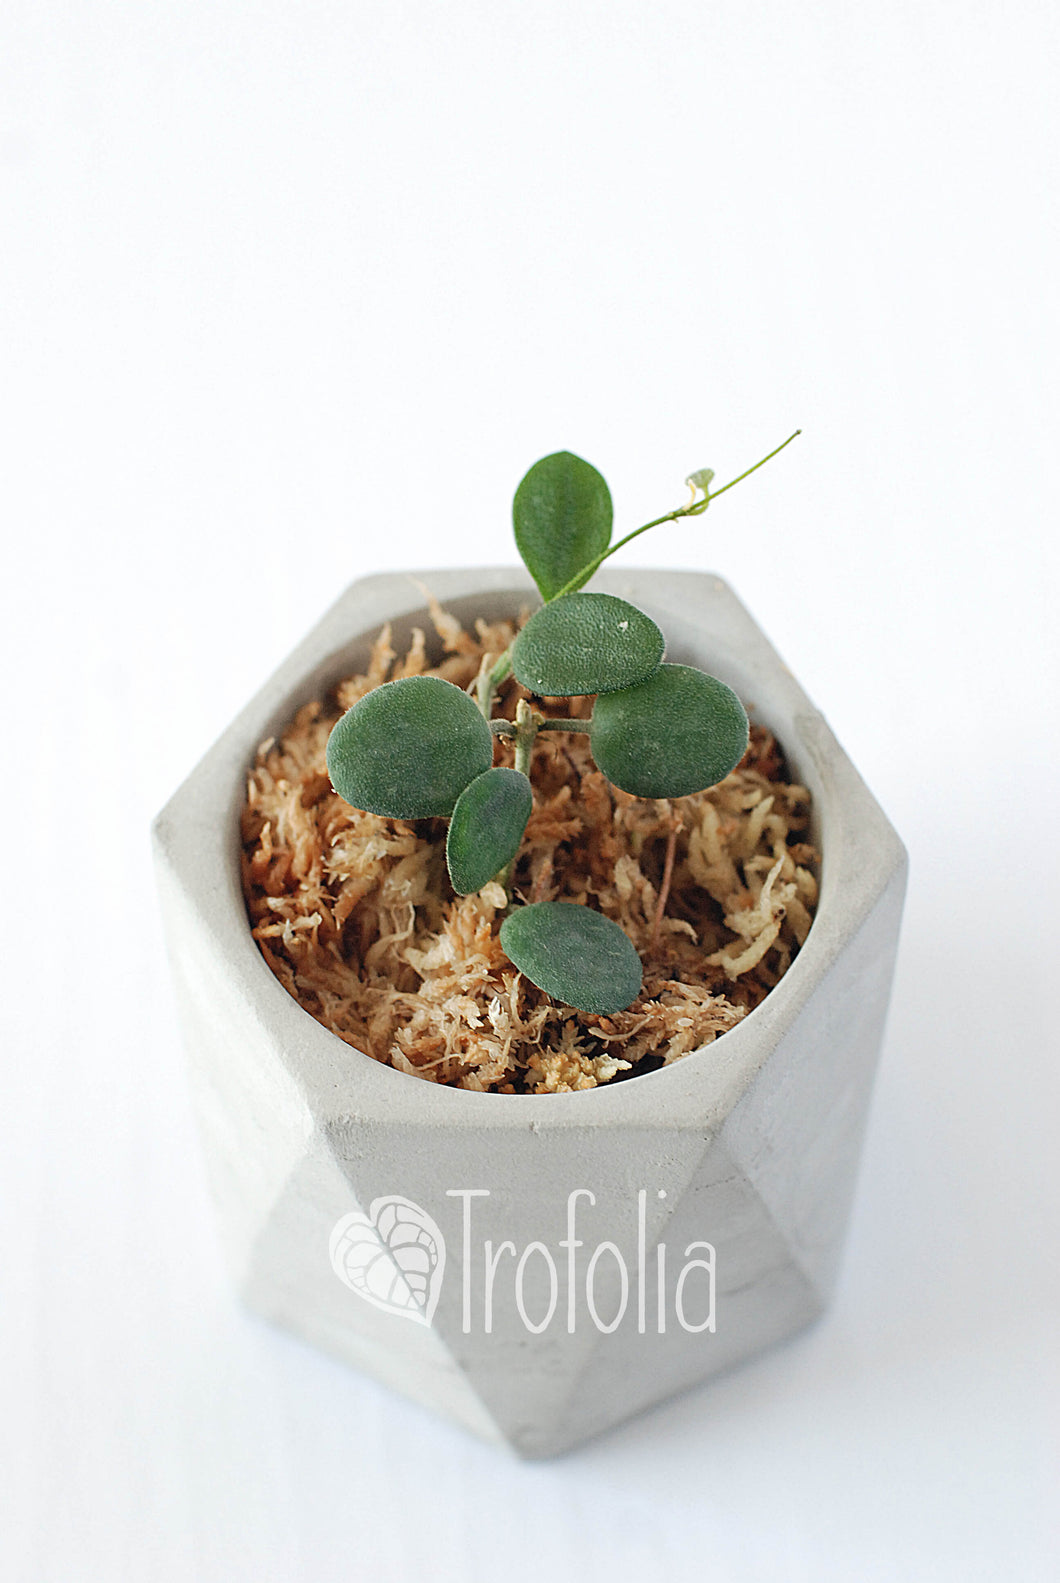 Hoya Serpens - Trofolia